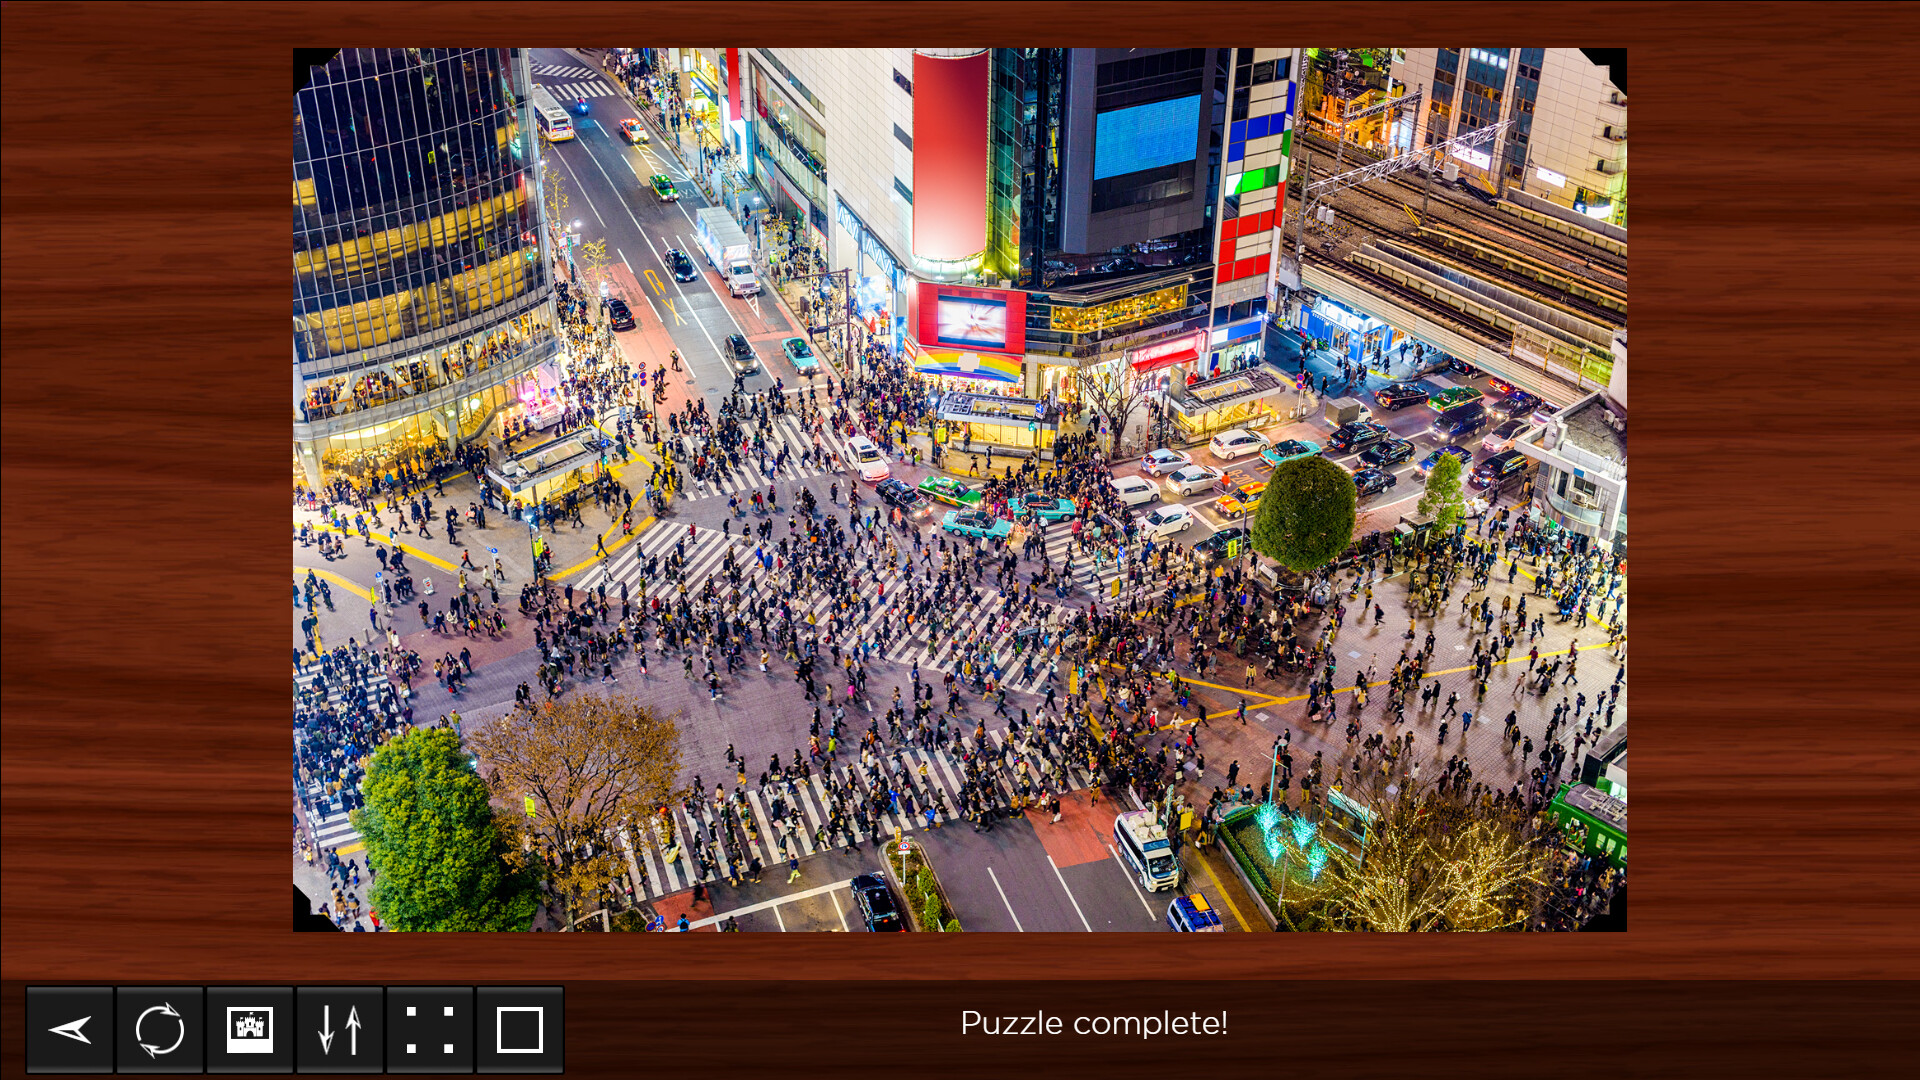 Jigsaw Puzzle World - Japan DLC Steam CD Key